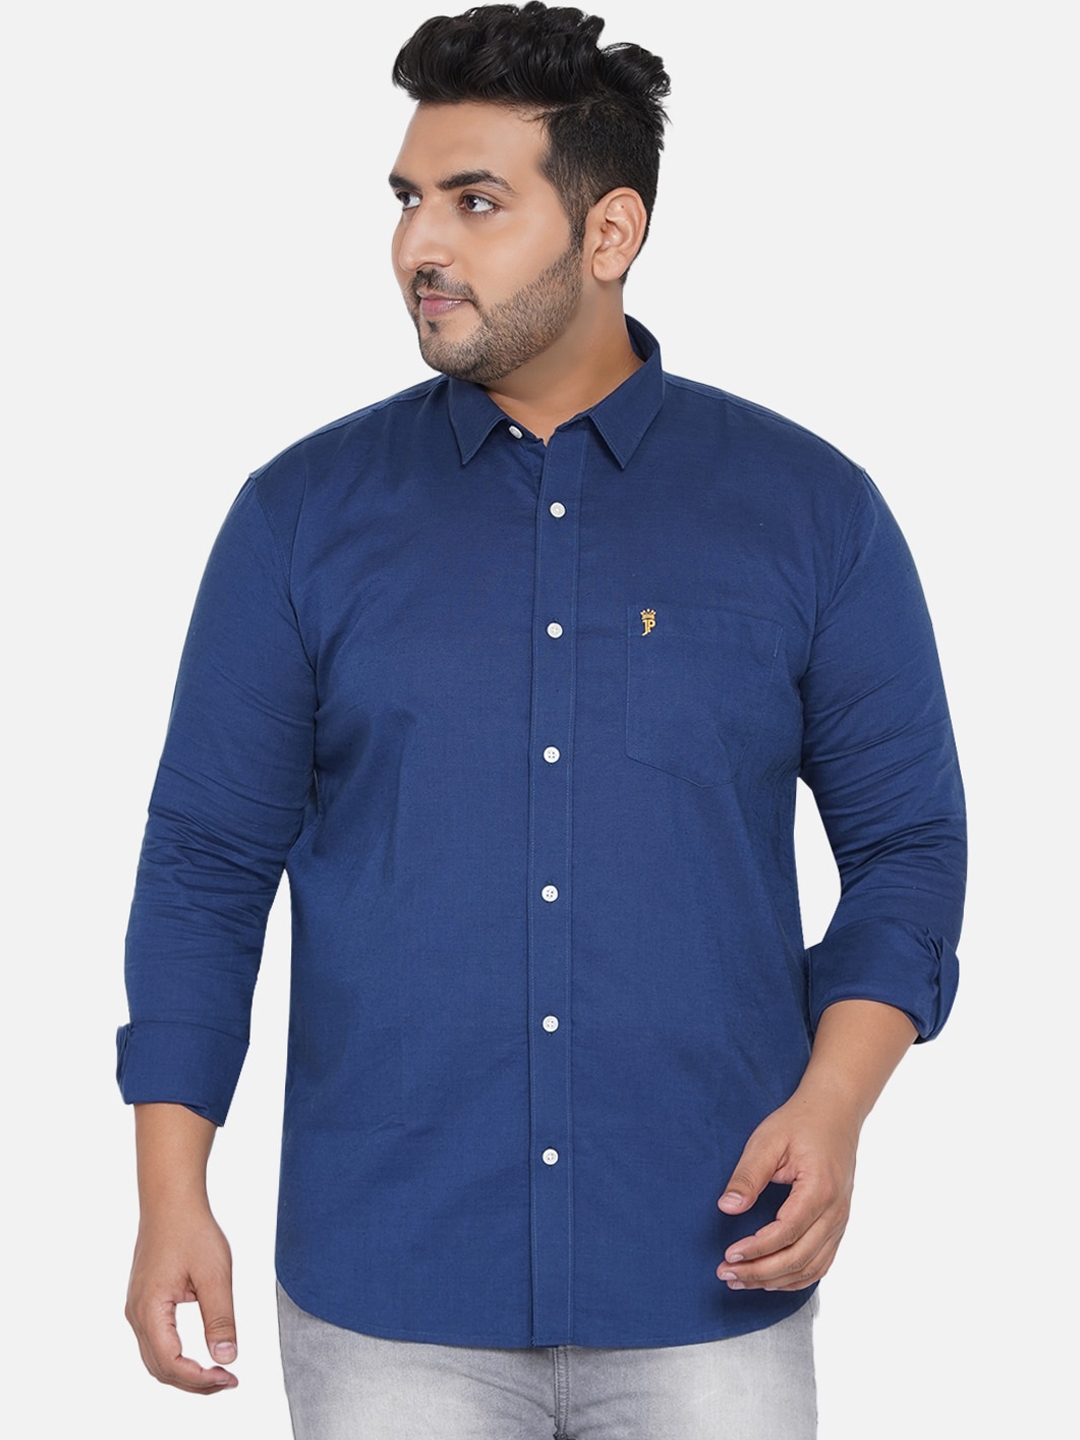 John Pride Men Blue Solid Plus Size Casual Shirt